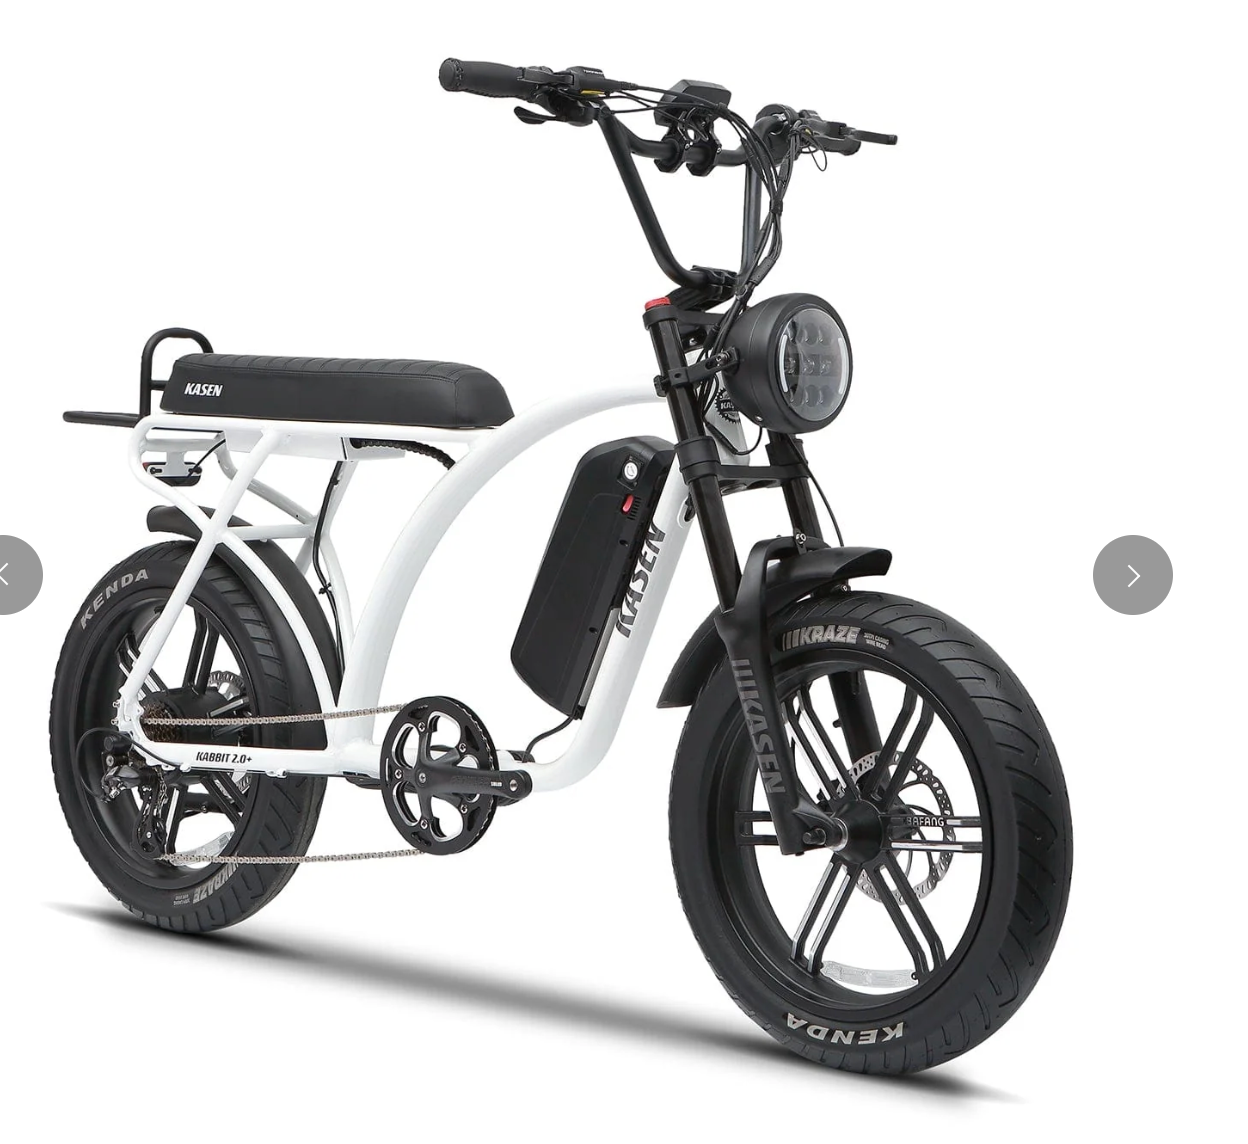 Kasen Kabbit Plus 2.0 Moto Style Electric Bike